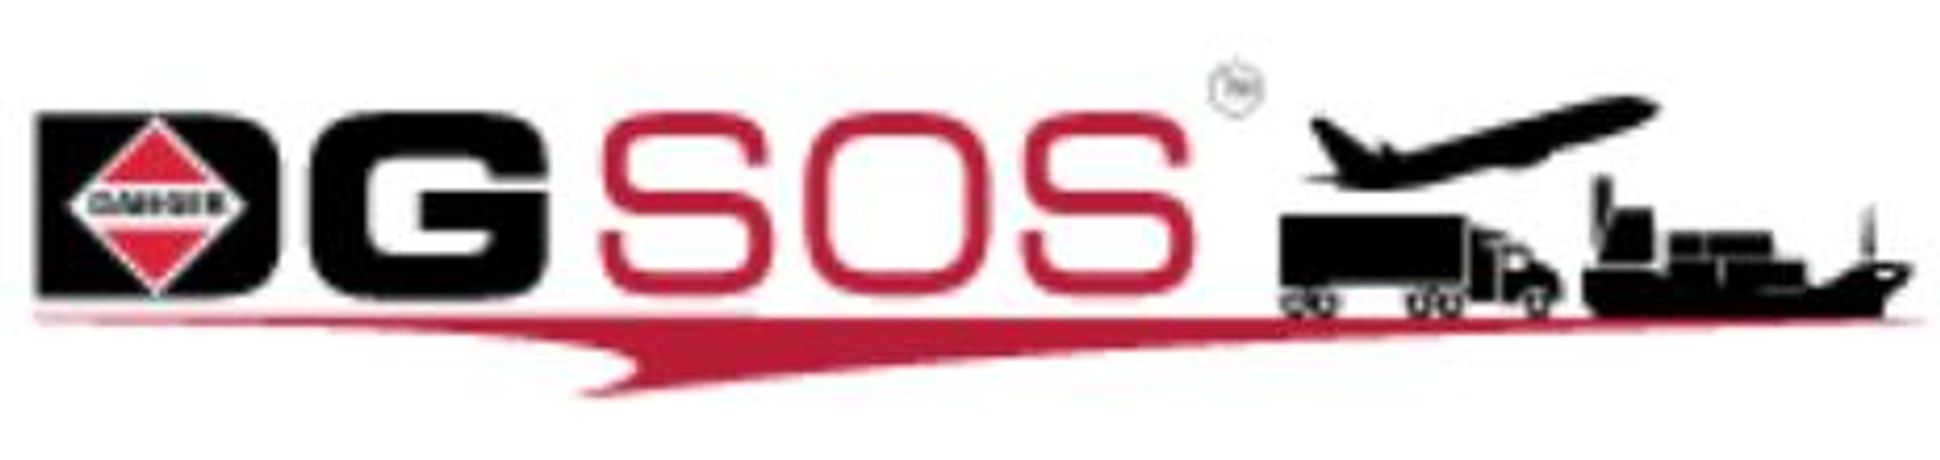 DGSOS - 2nd Opinion Service